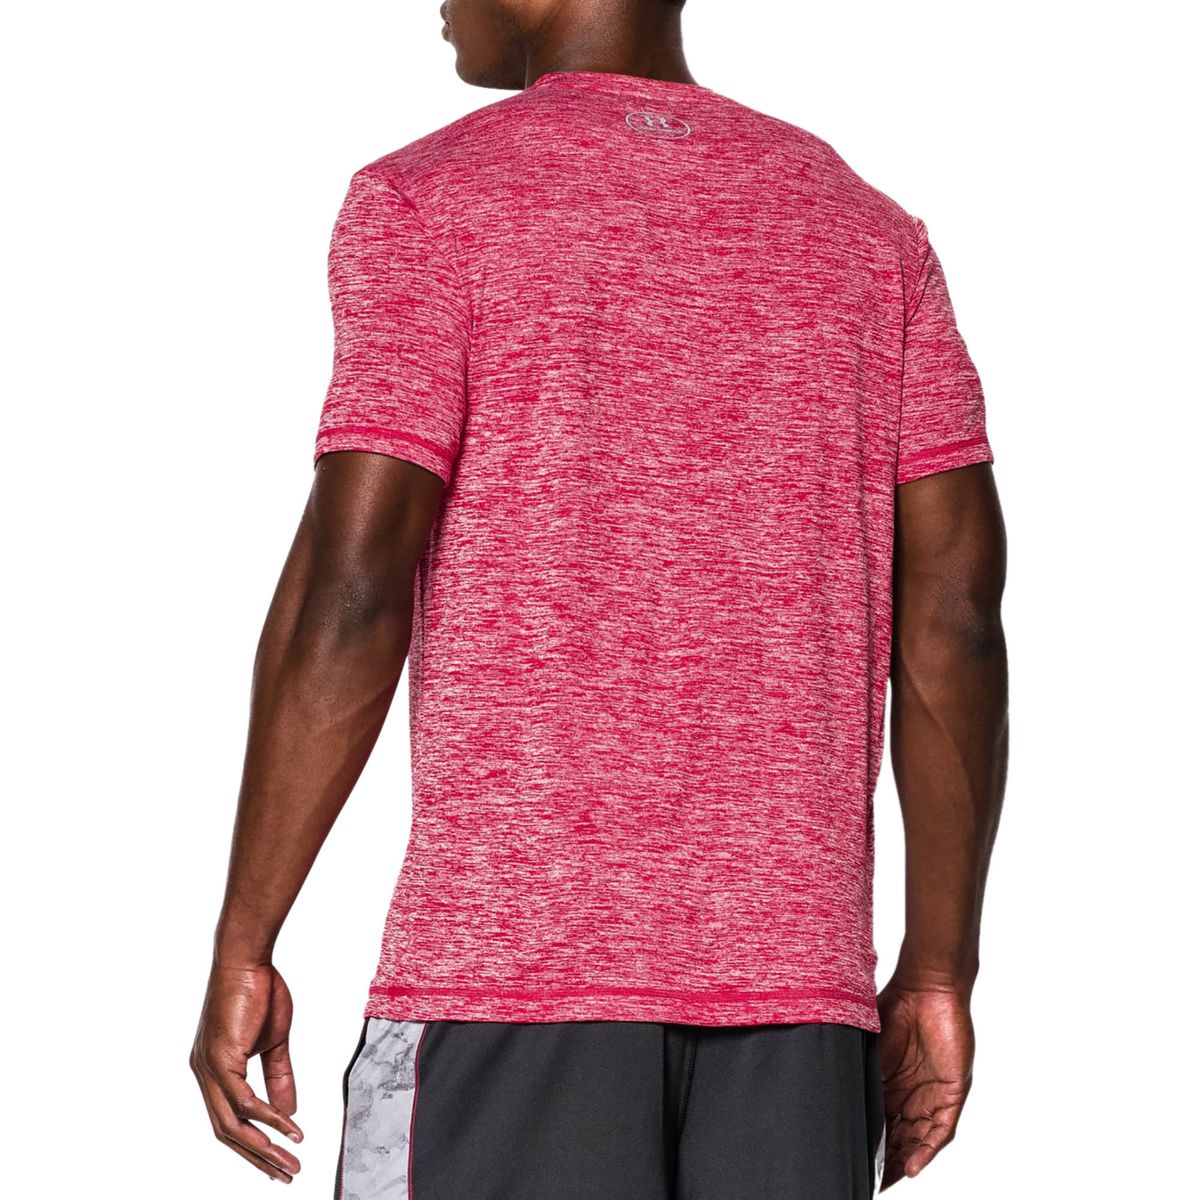 mens pink under armour shirt